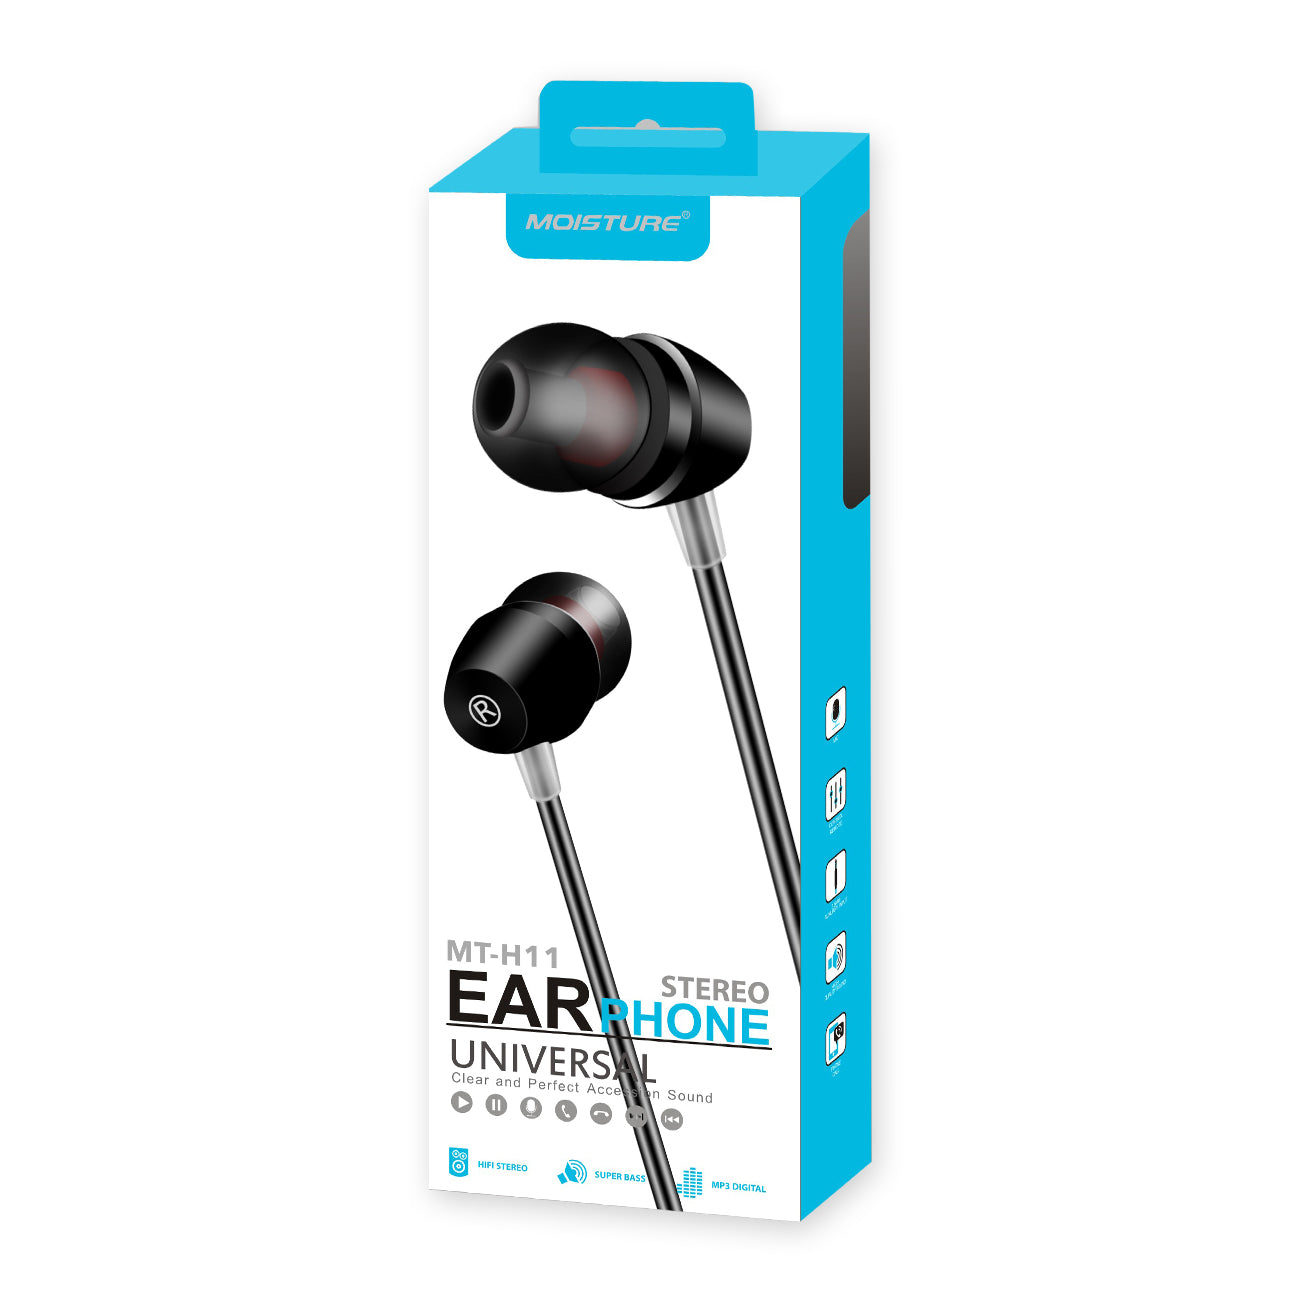 High Quality Sound Universal In-ear Earphones In Black